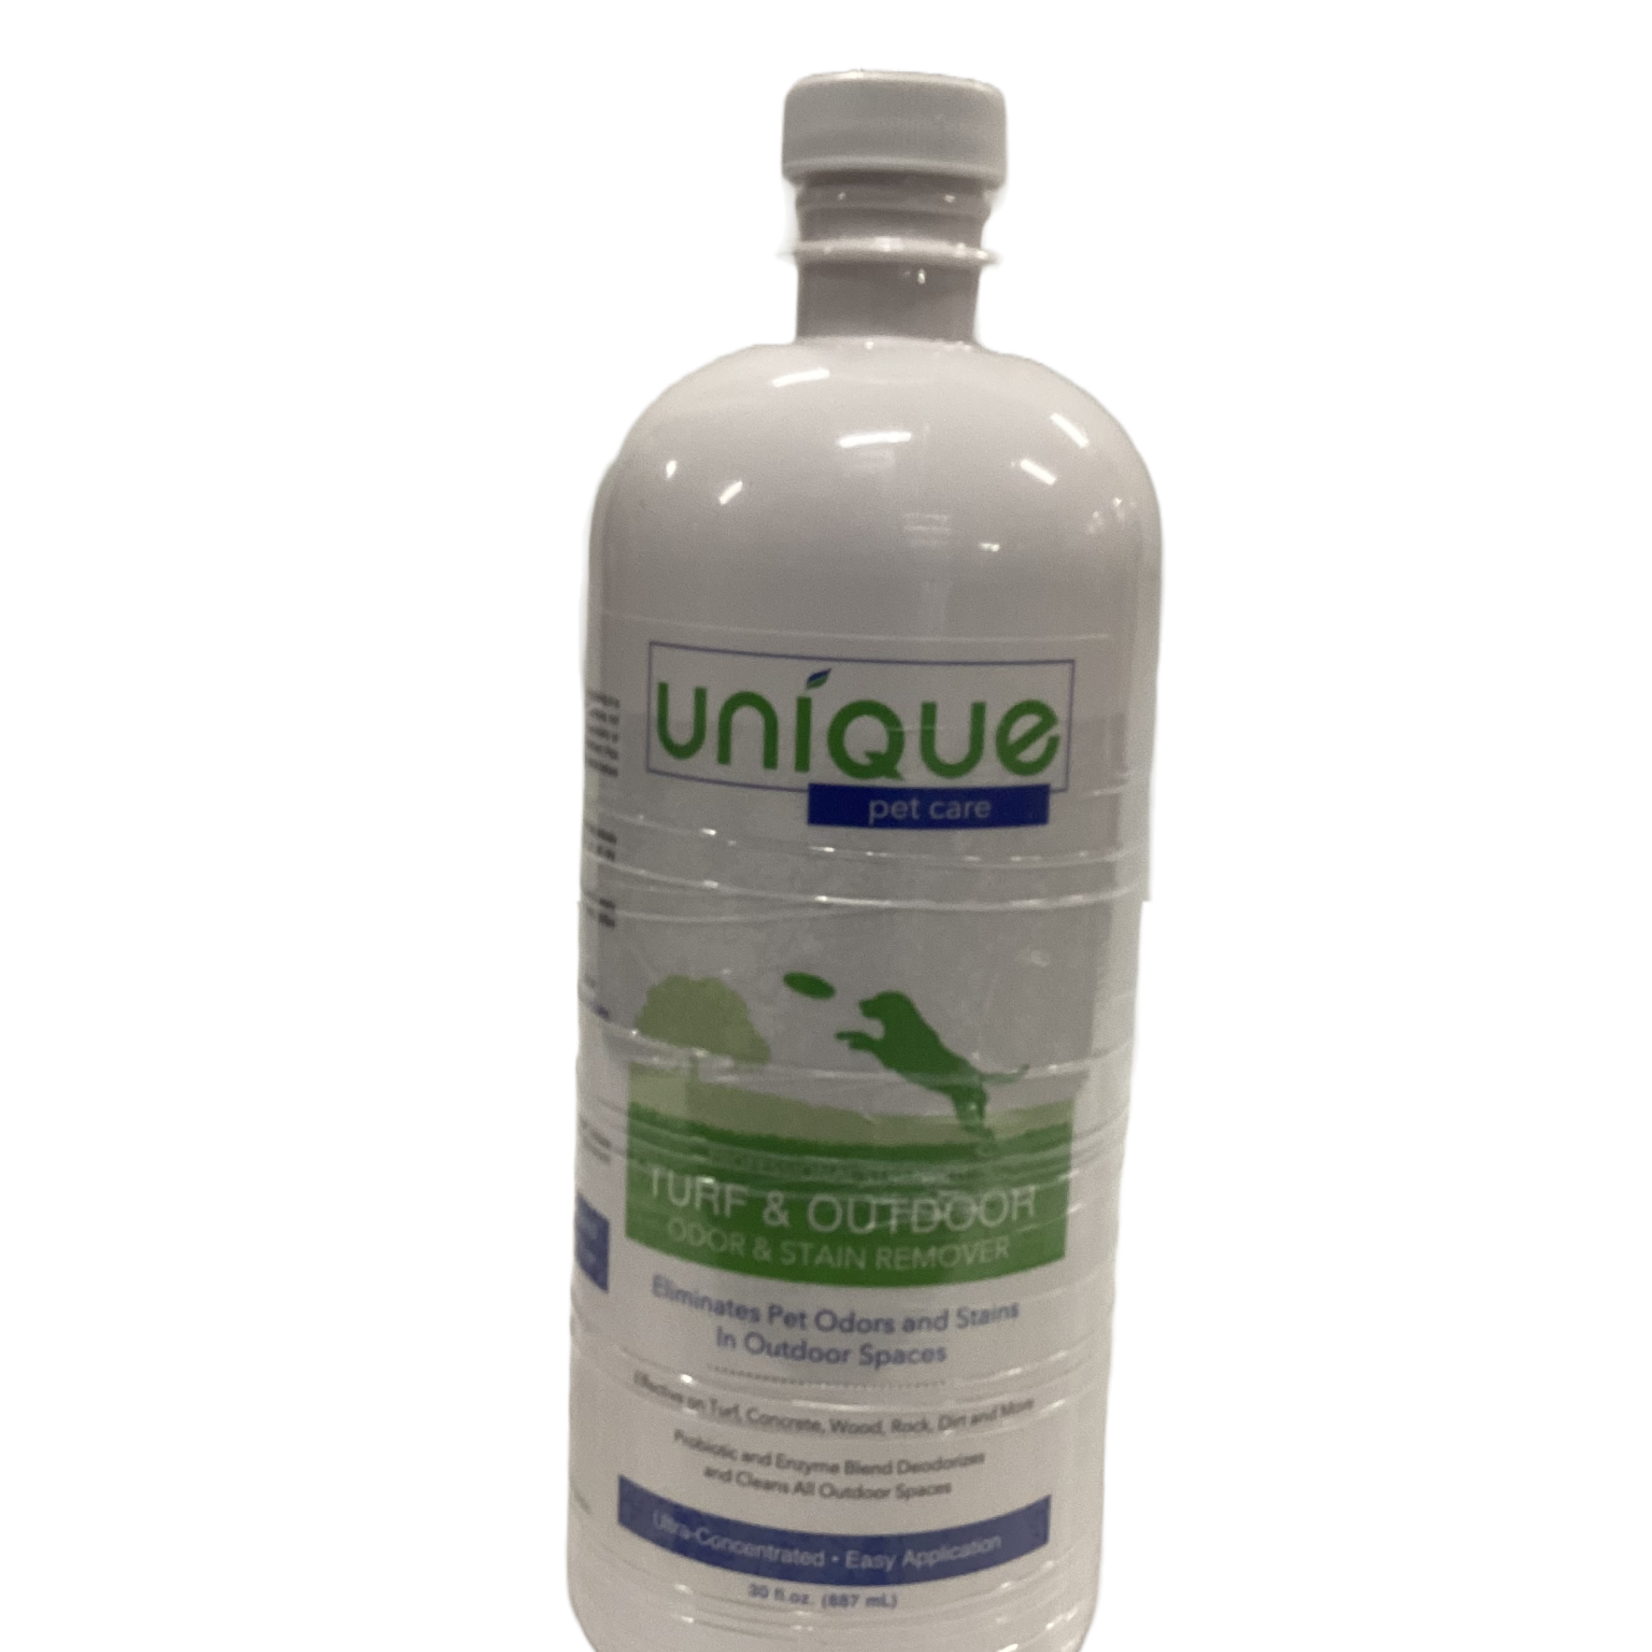 UniQue Turf & Outdoor Odor & Stain Remover 30 oz